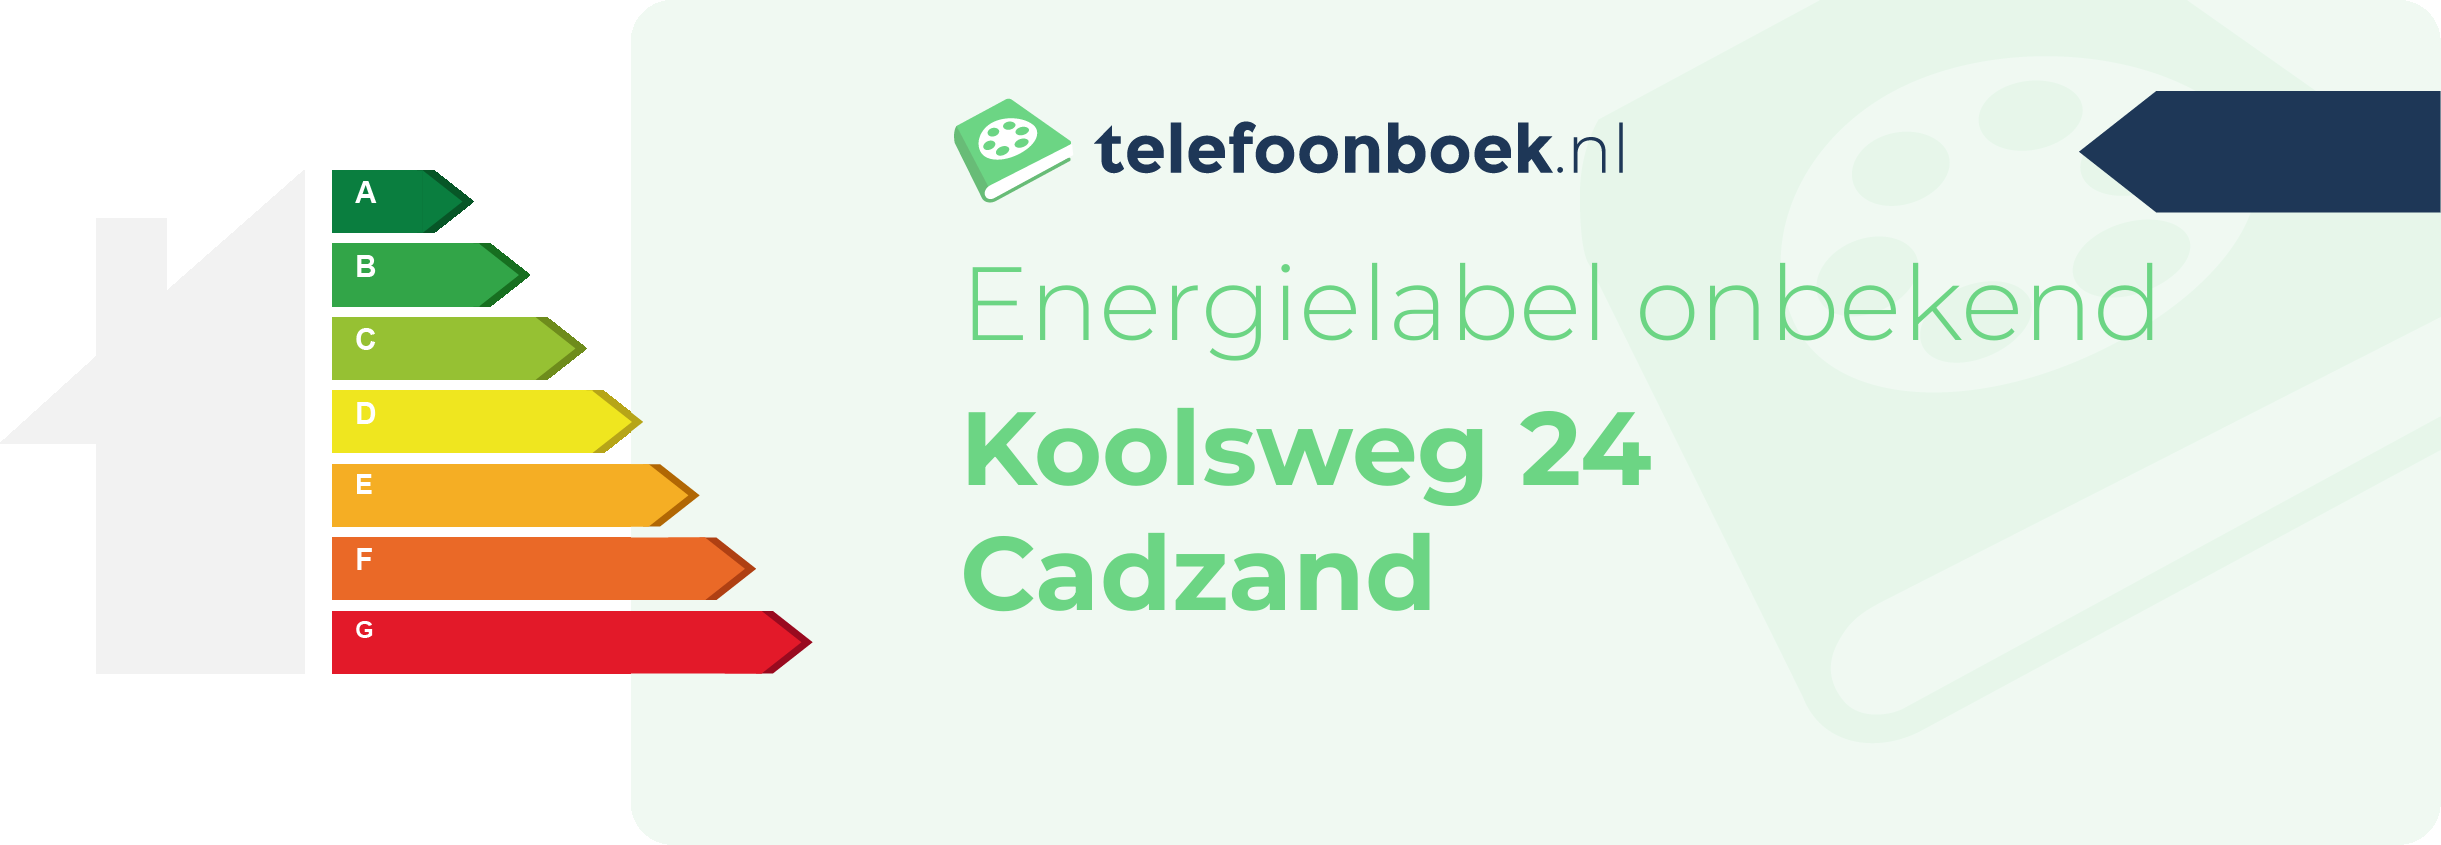 Energielabel Koolsweg 24 Cadzand